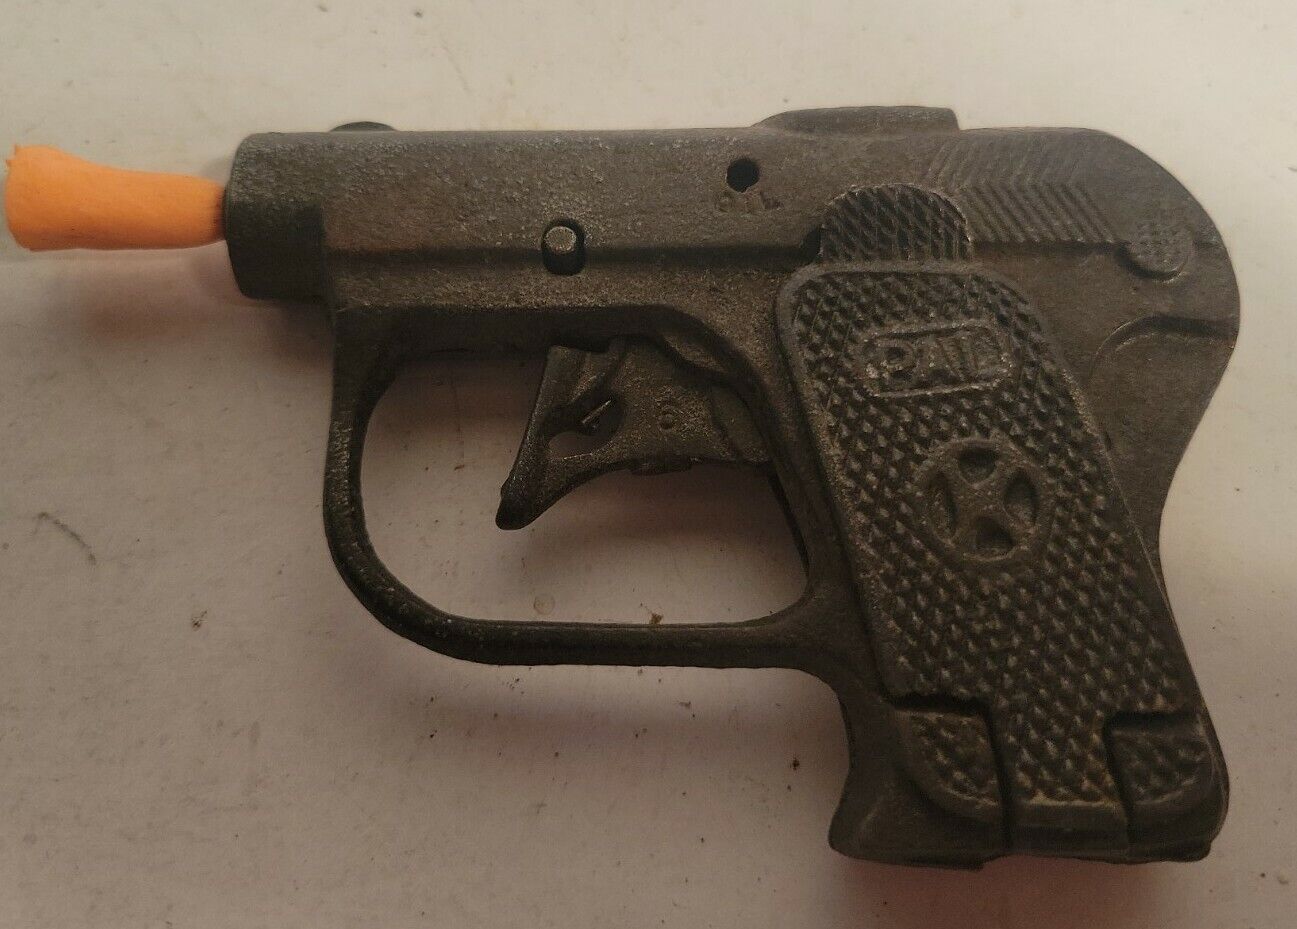 Vintage Kilgore “pal” Toy Cap Gun Cast Iron Revolver P12 Snub Nose With Ammo